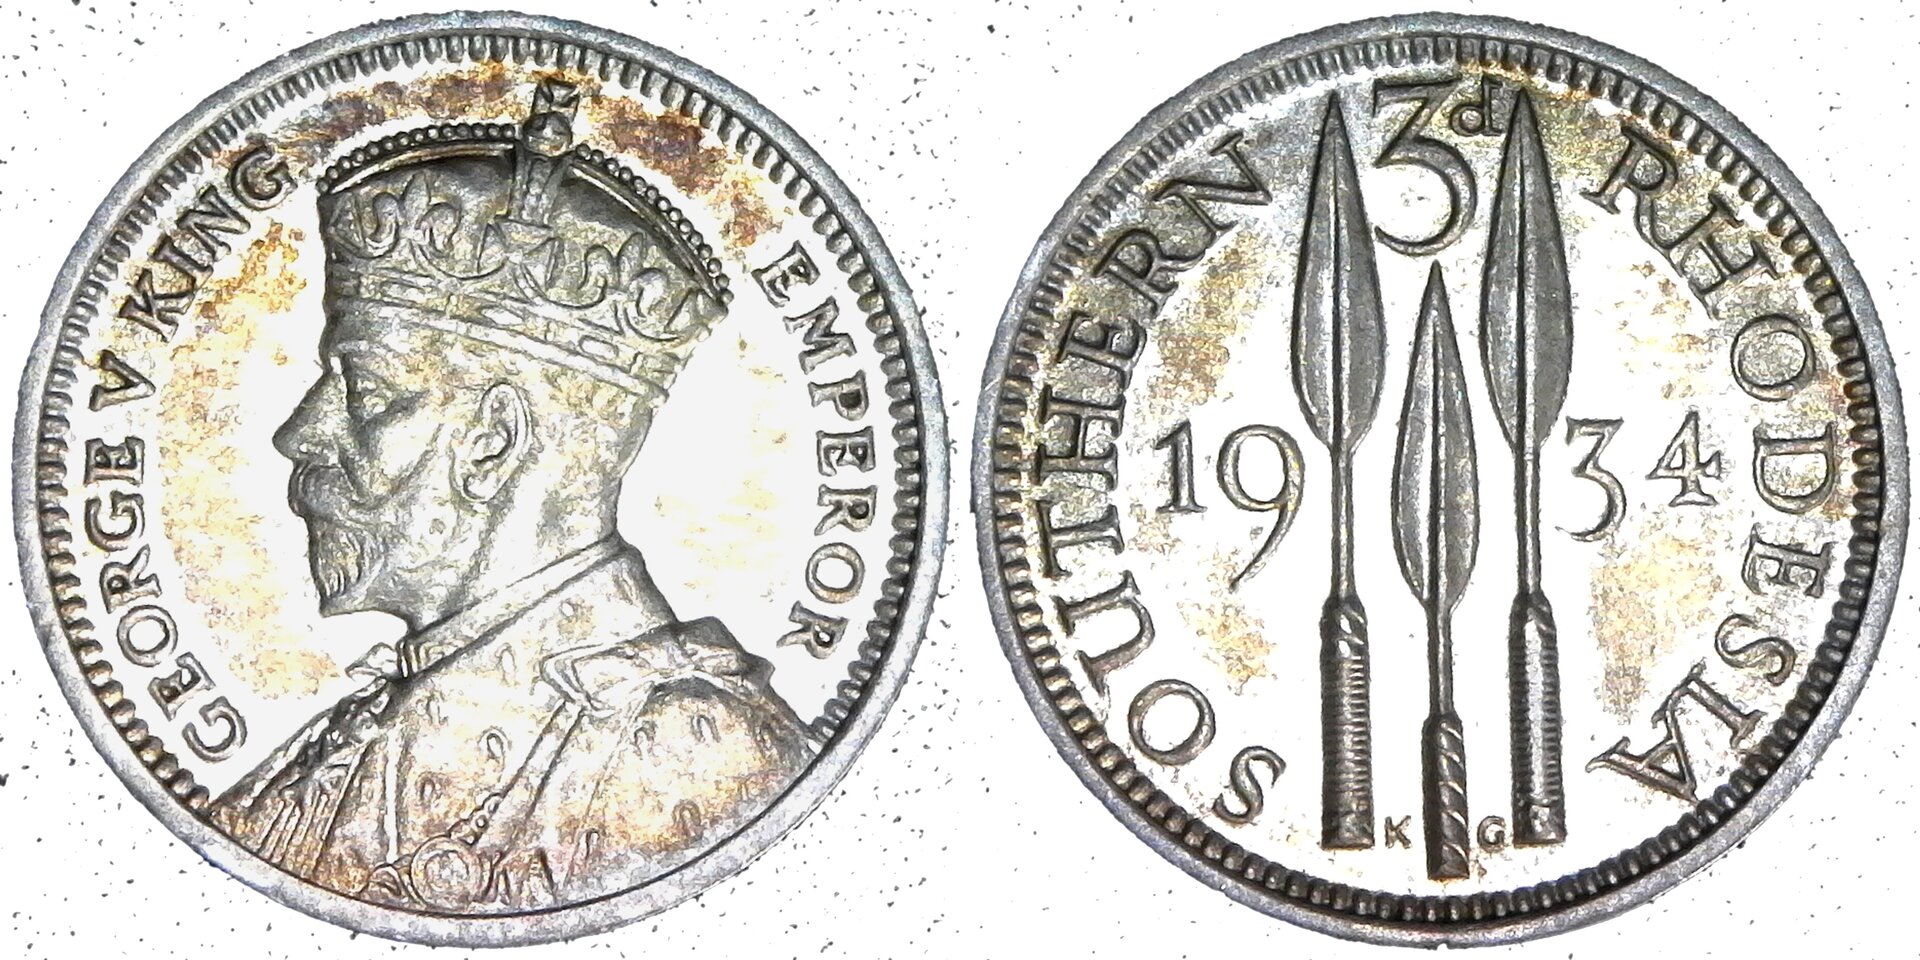 Southern Rhodesia 3 Pence 1934 obv-side-cutout.jpg